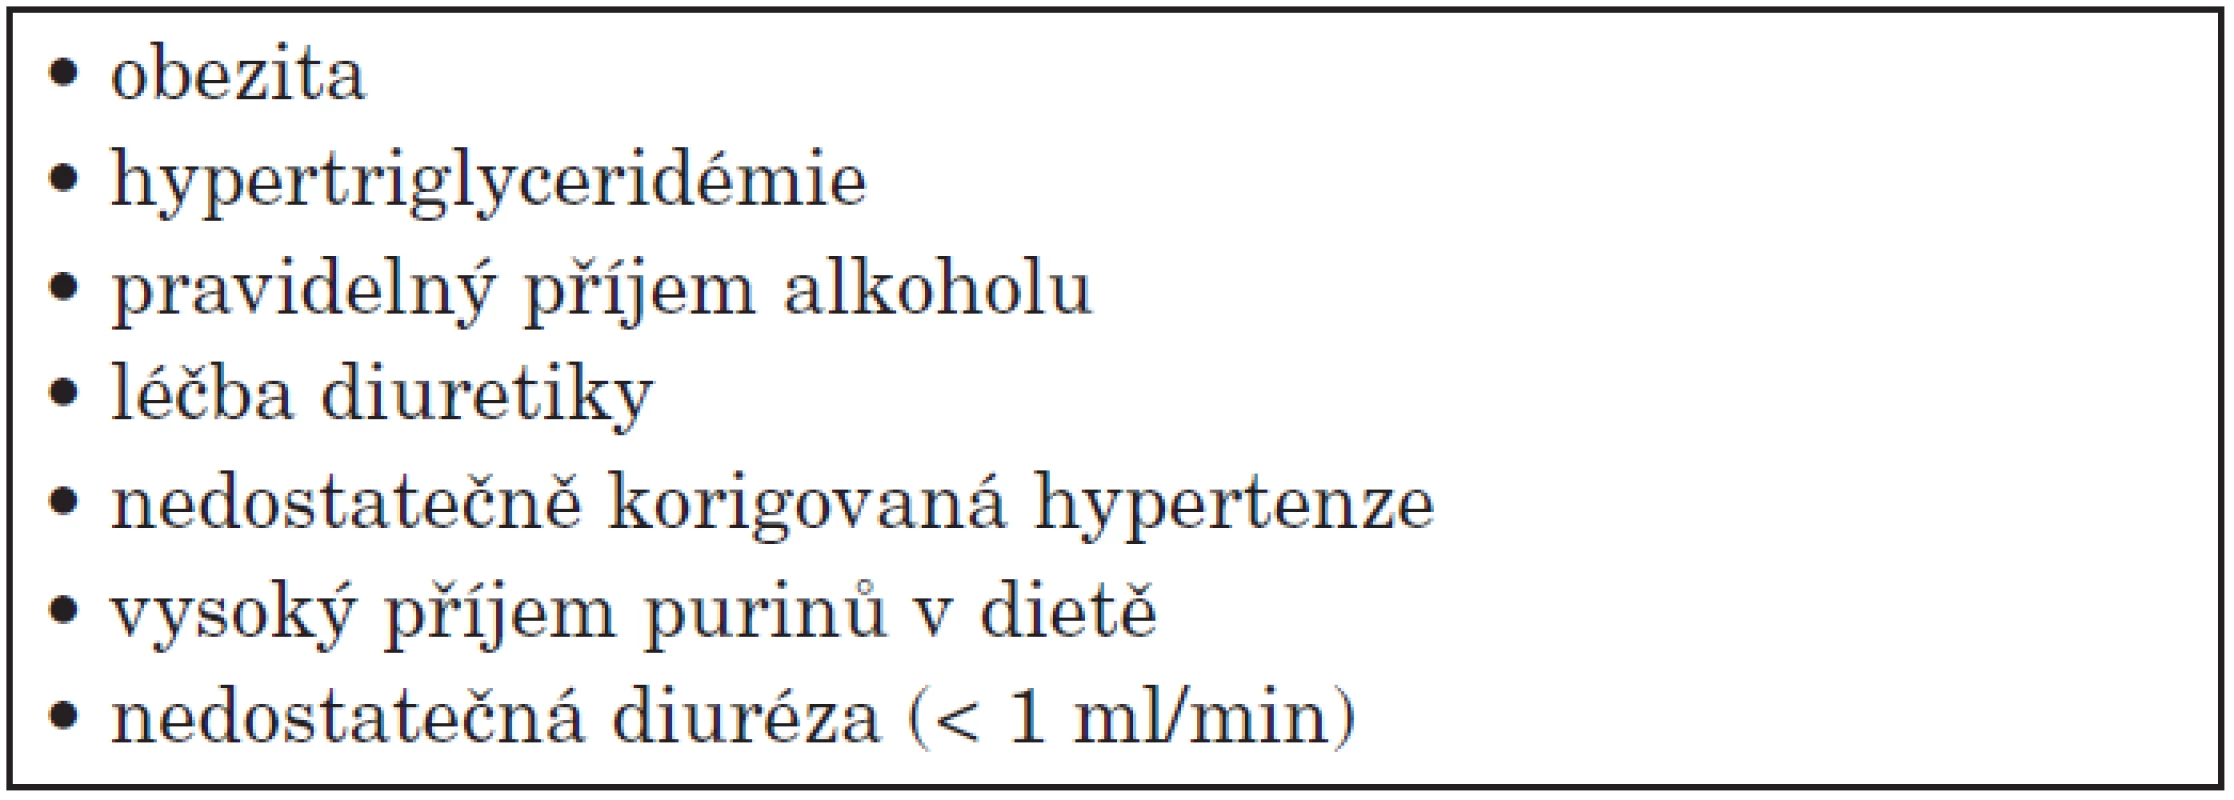 Korigovatelné faktory u hyperurikémie.